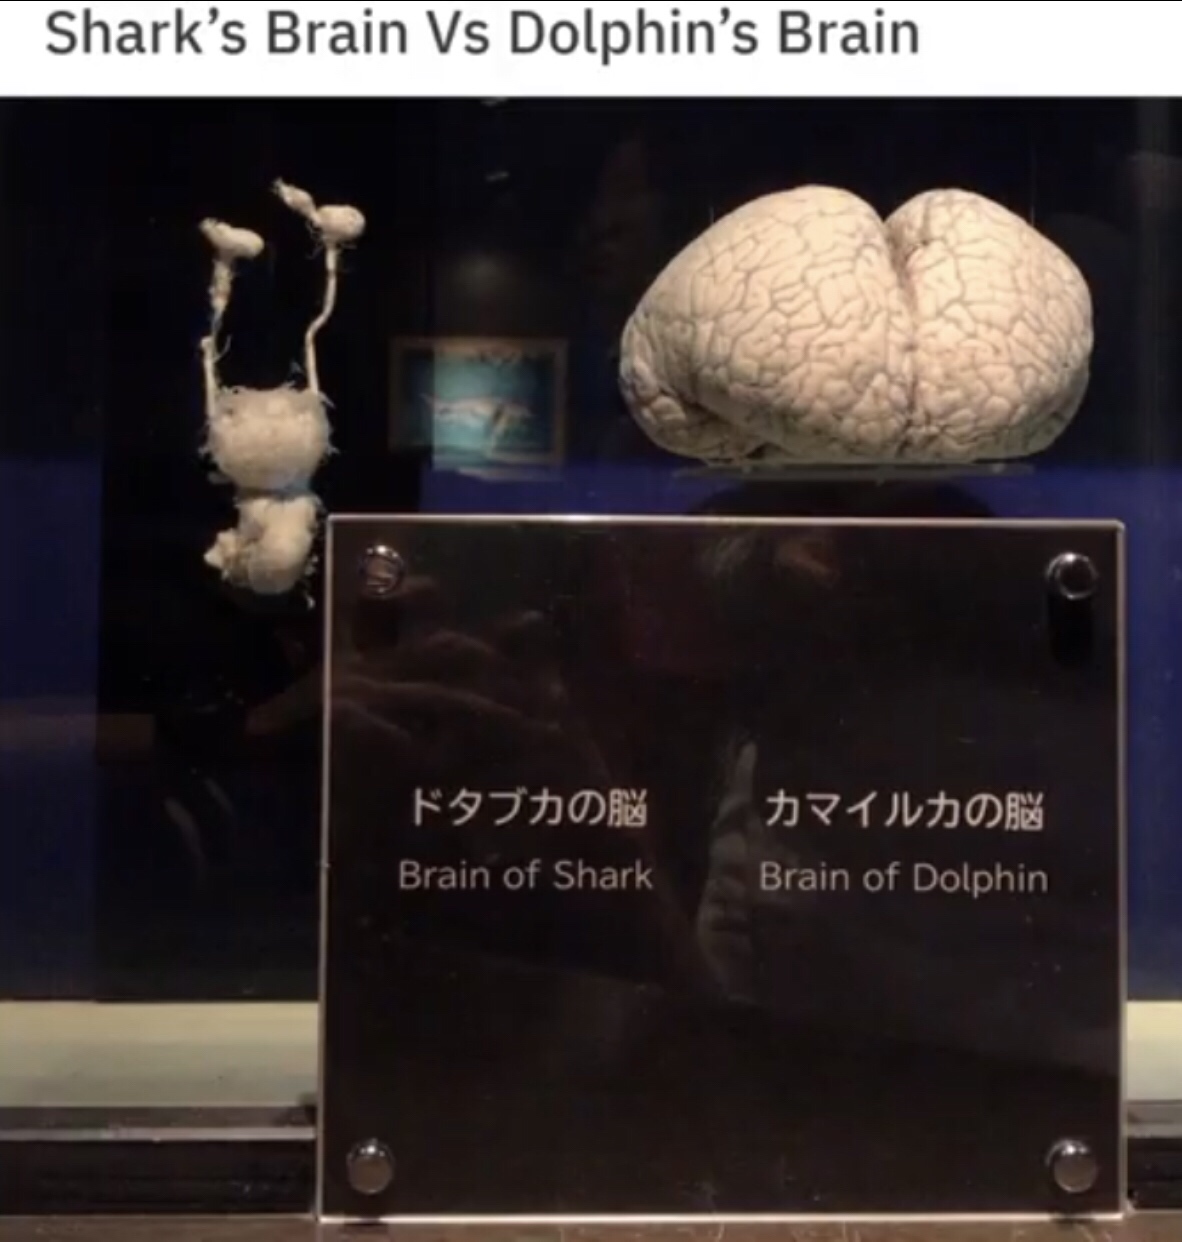 shark brain vs dolphin brain - Shark's Brain Vs Dolphin's Brain Brain of Shark Brain of Dolphin